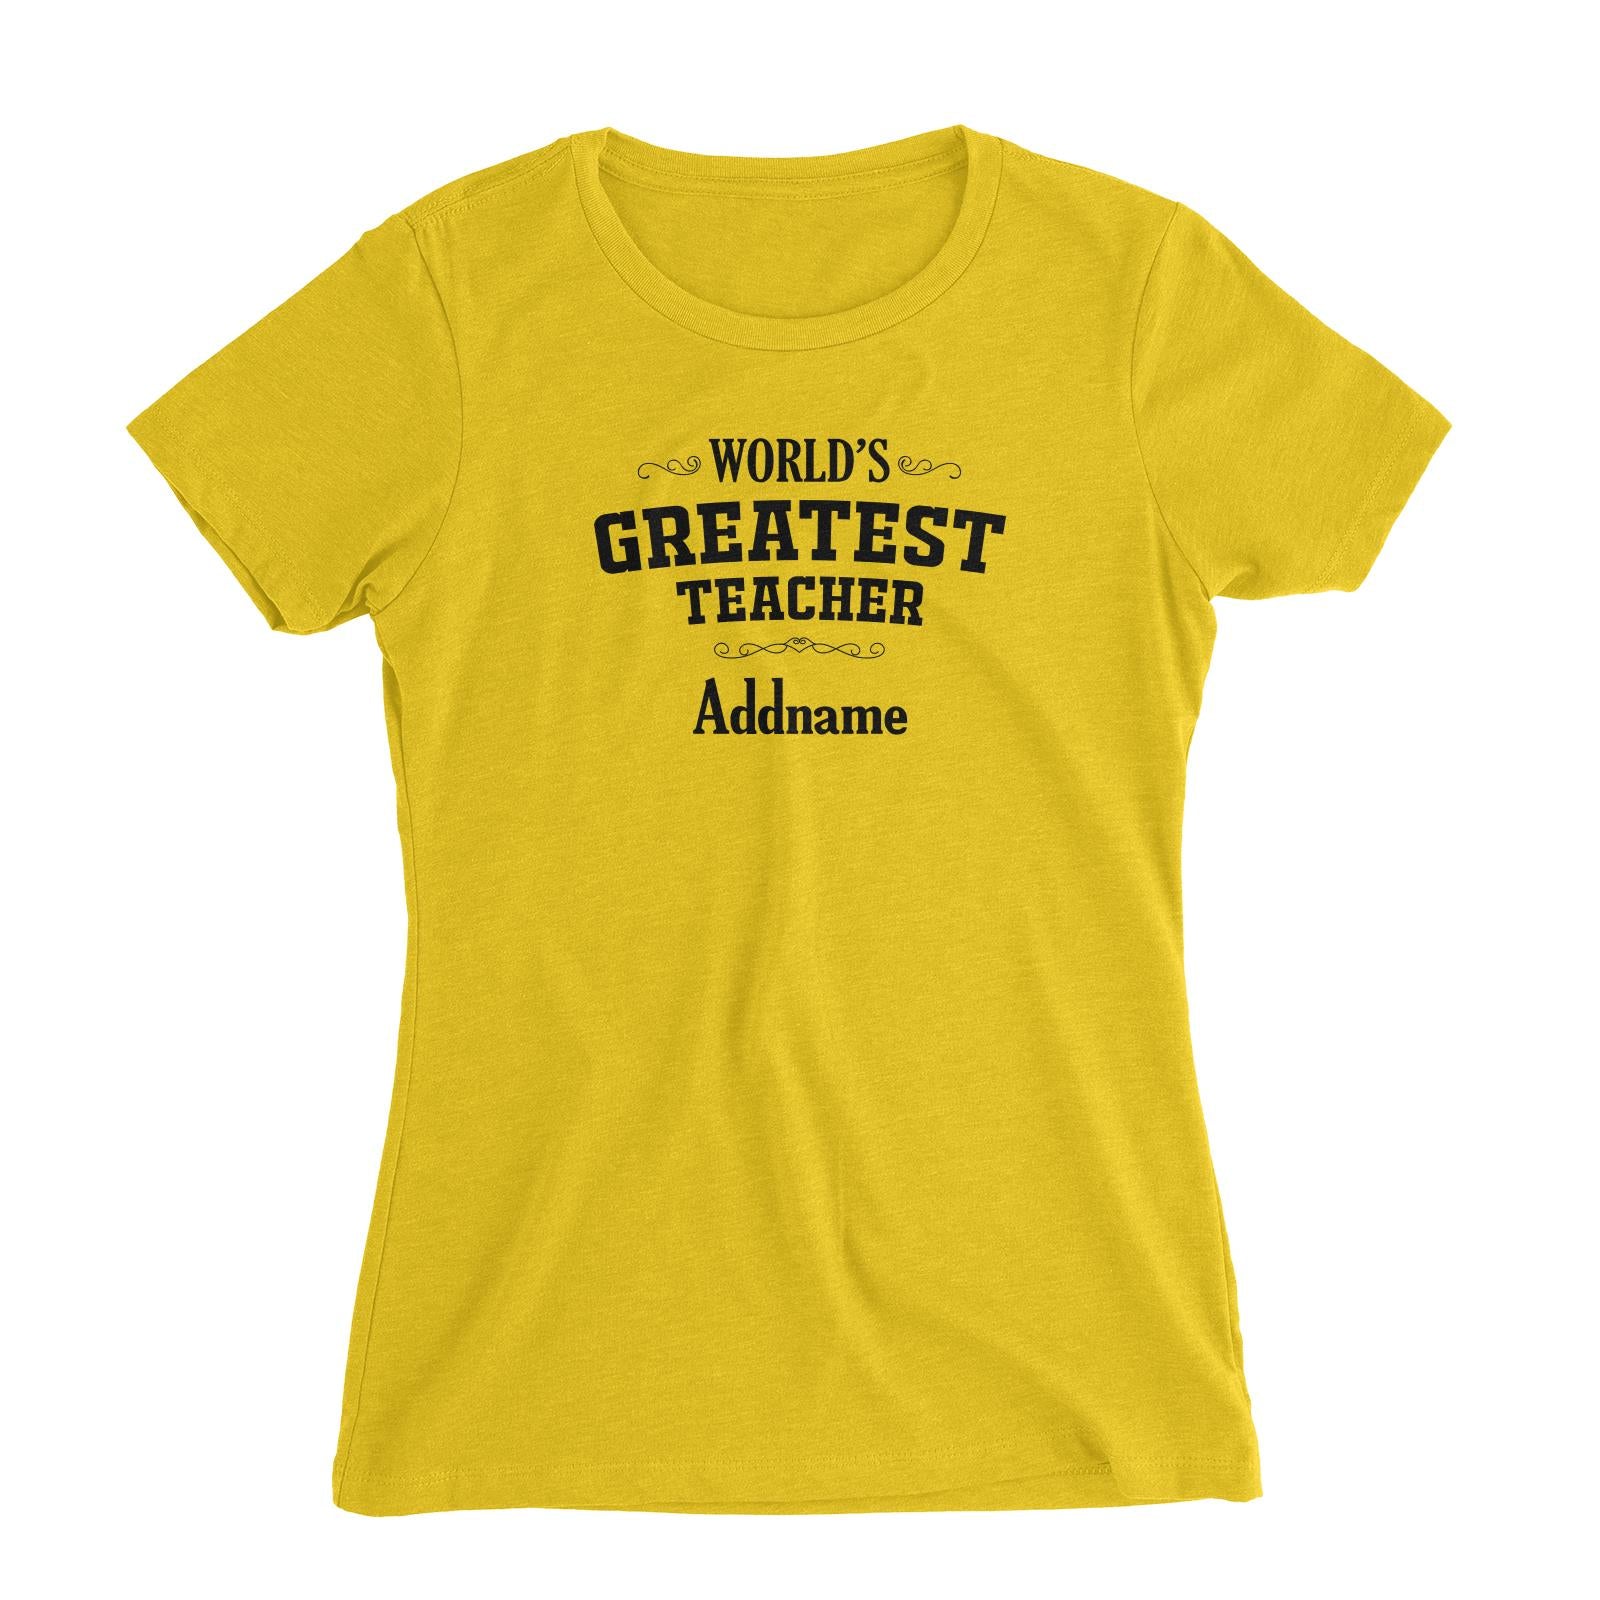 Great Teachers World's Greatest Teacher Addname Women's Slim Fit T-Shirt